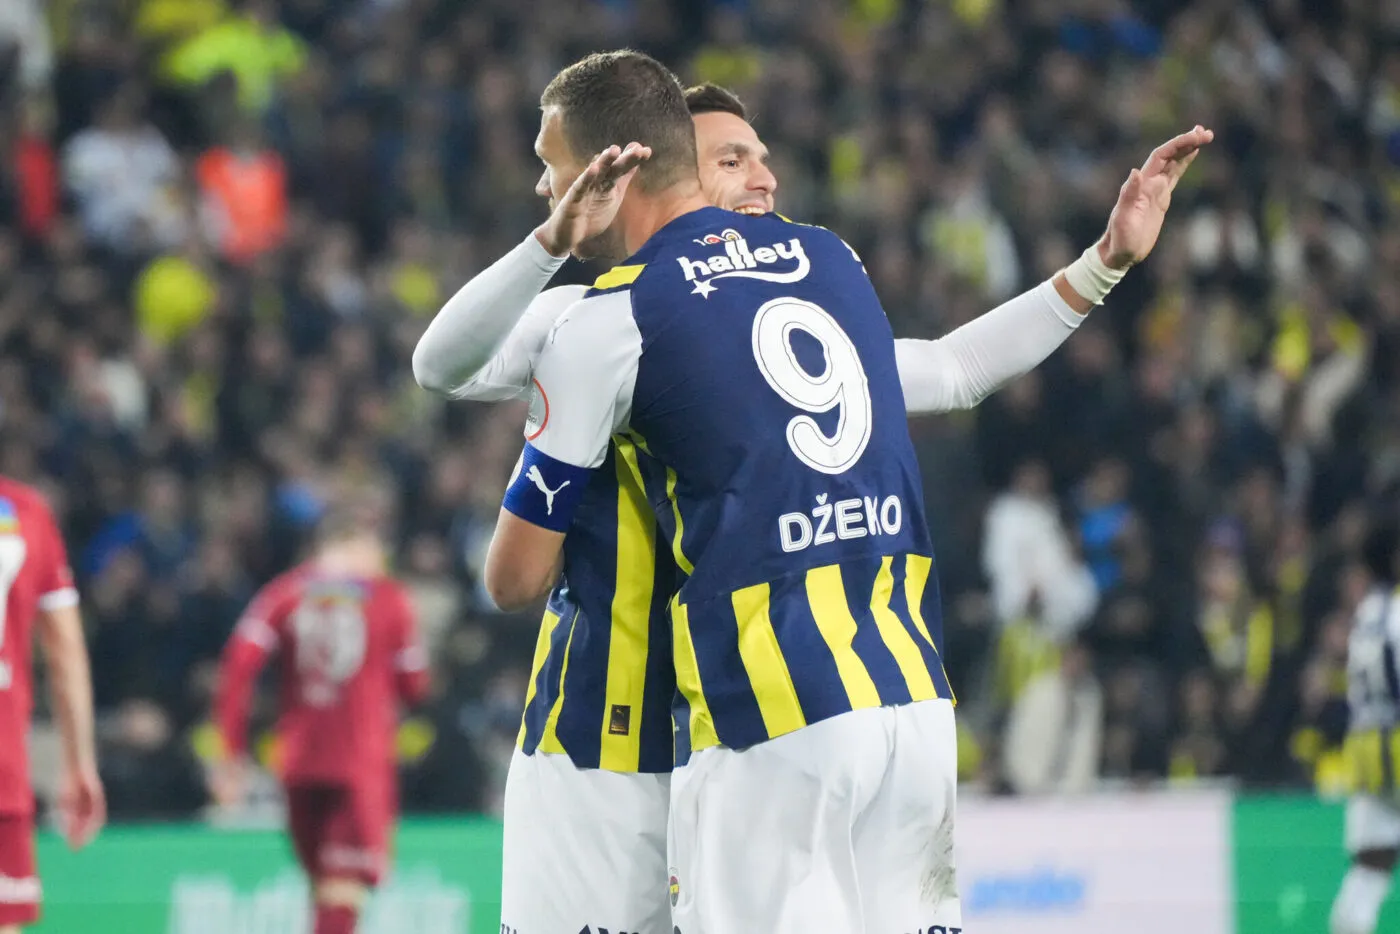 Fenerbahçe s&rsquo;offre Beşiktaş